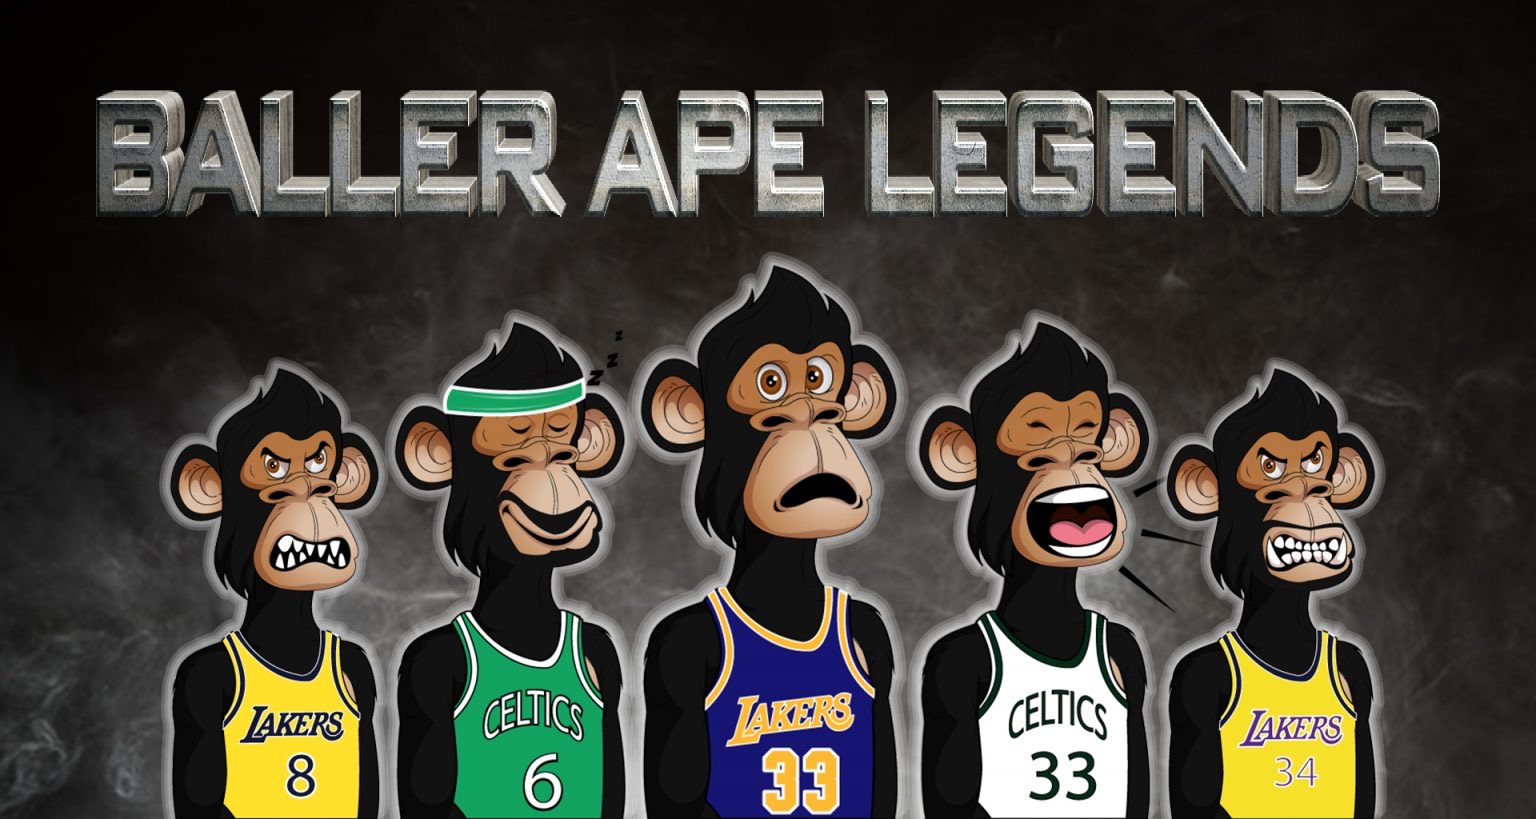 Baller Ape Legends - (Official collection)